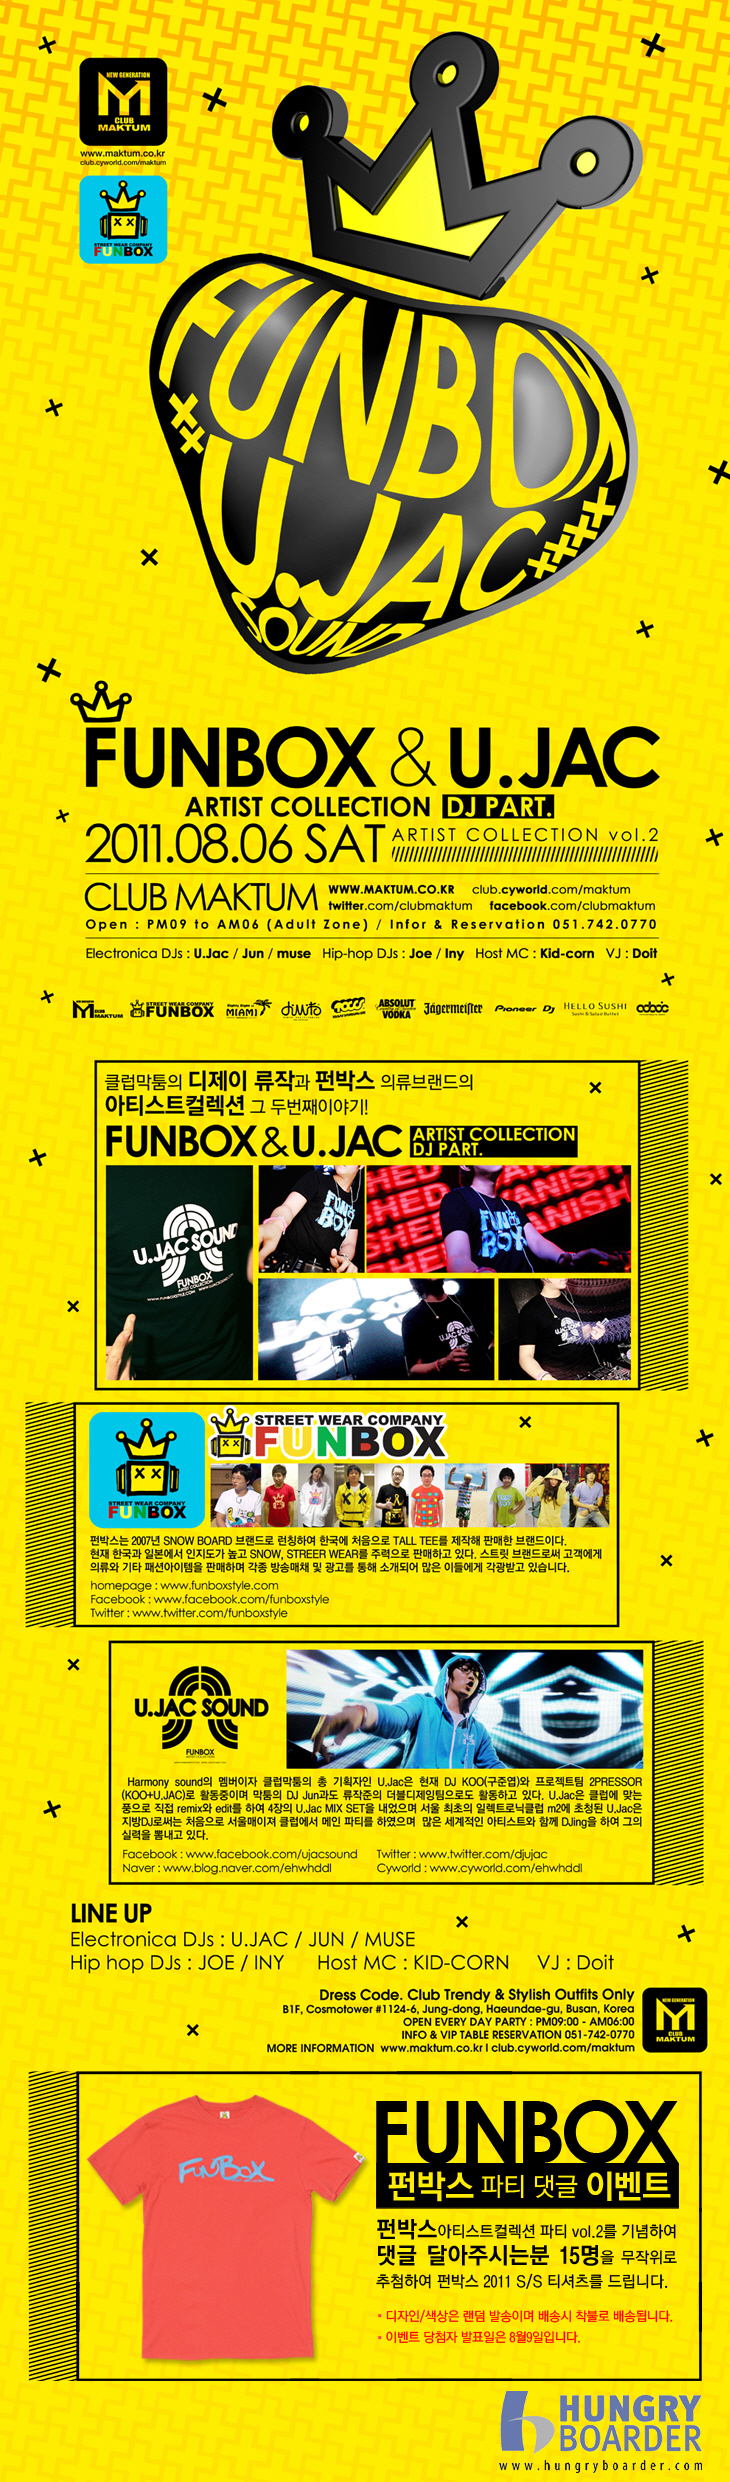 FUNBOX_20110806.jpg